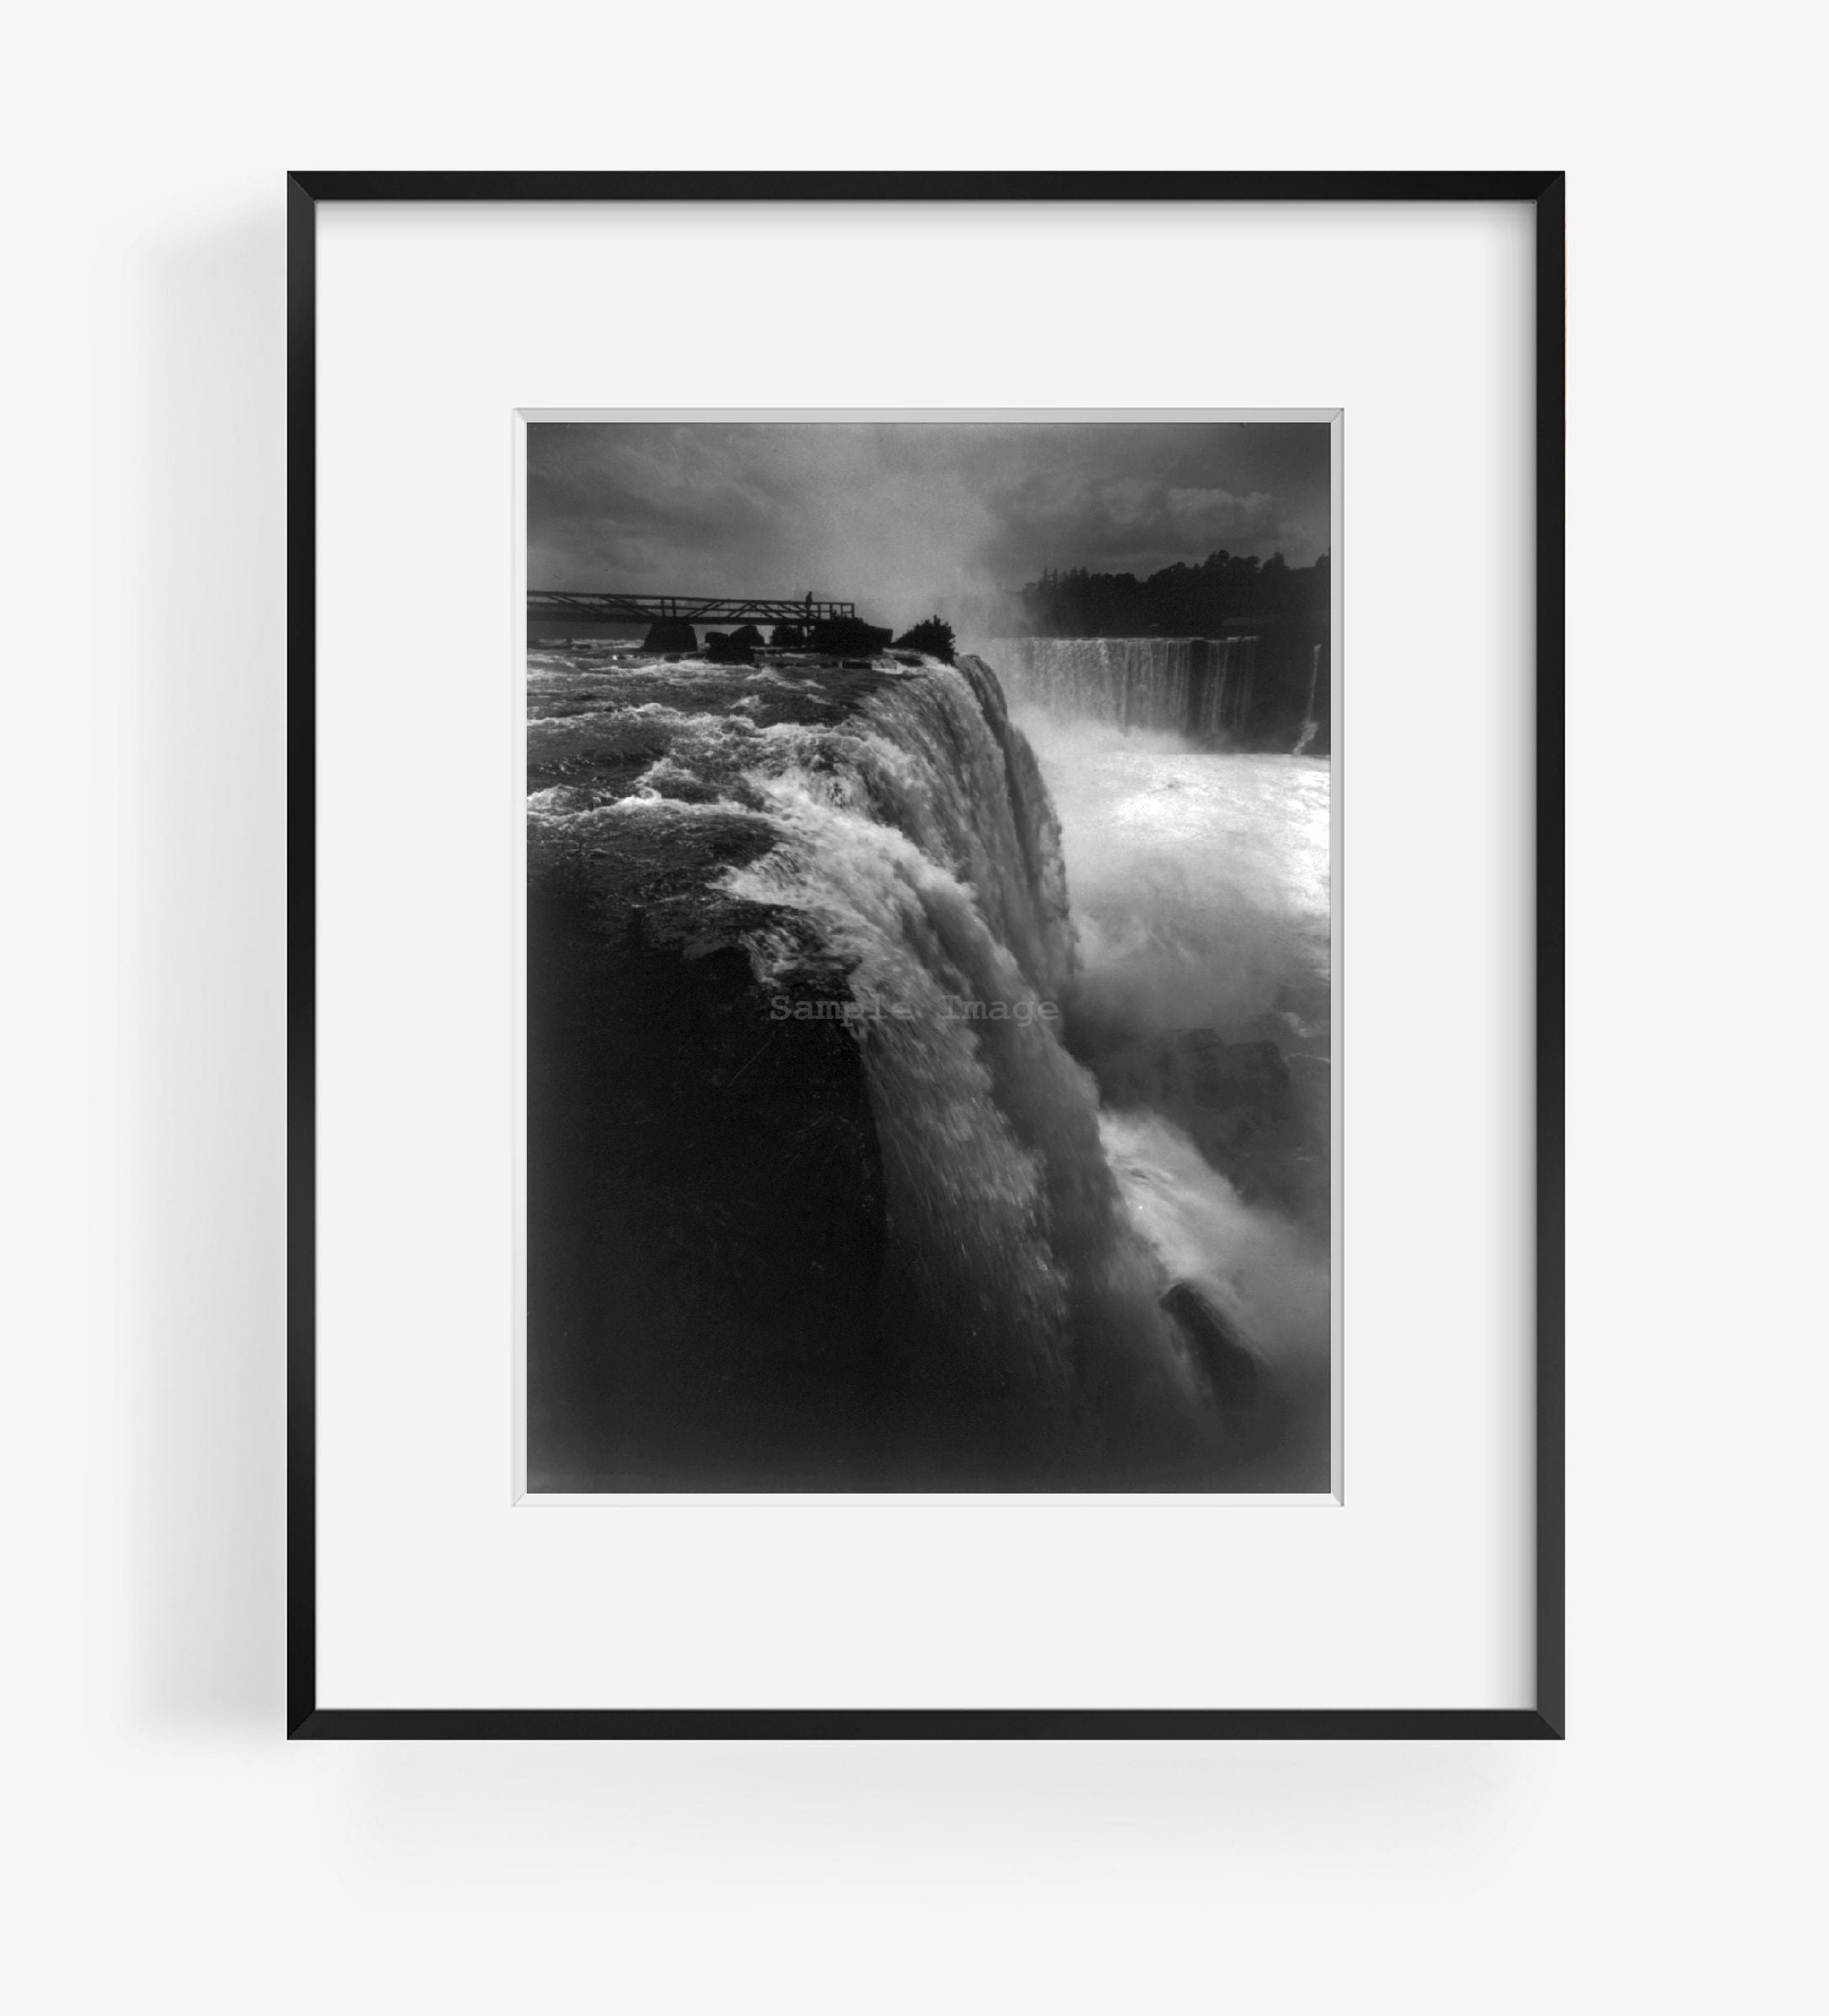 c1885 photograph of Horseshoe Falls, no. 2 Niagara Falls Summary: Man looking ov